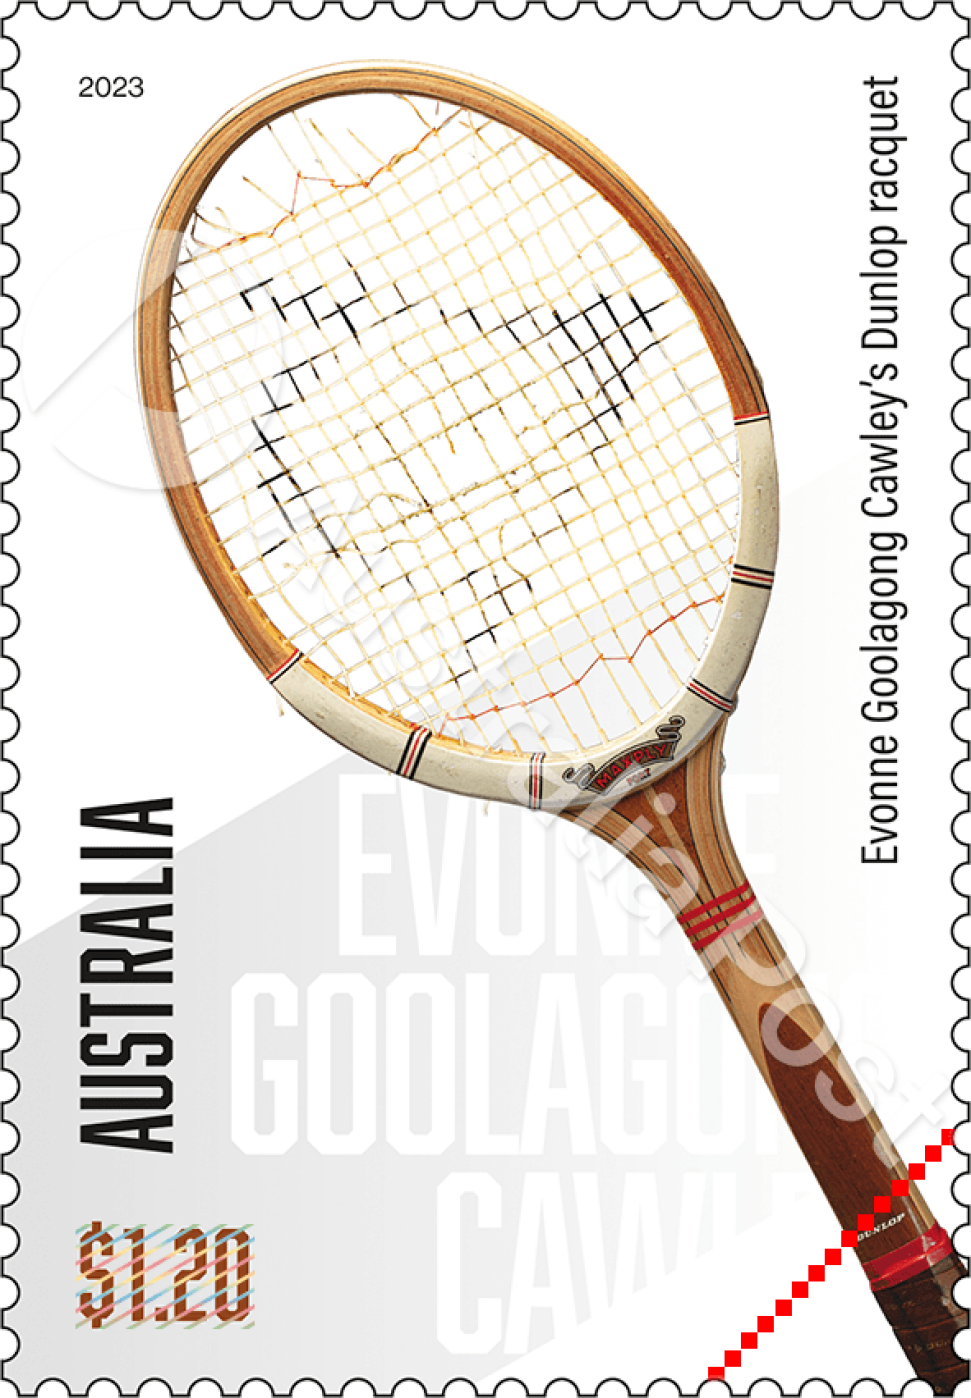 $1.20 Evonne Goolagong Cawley’s racquet